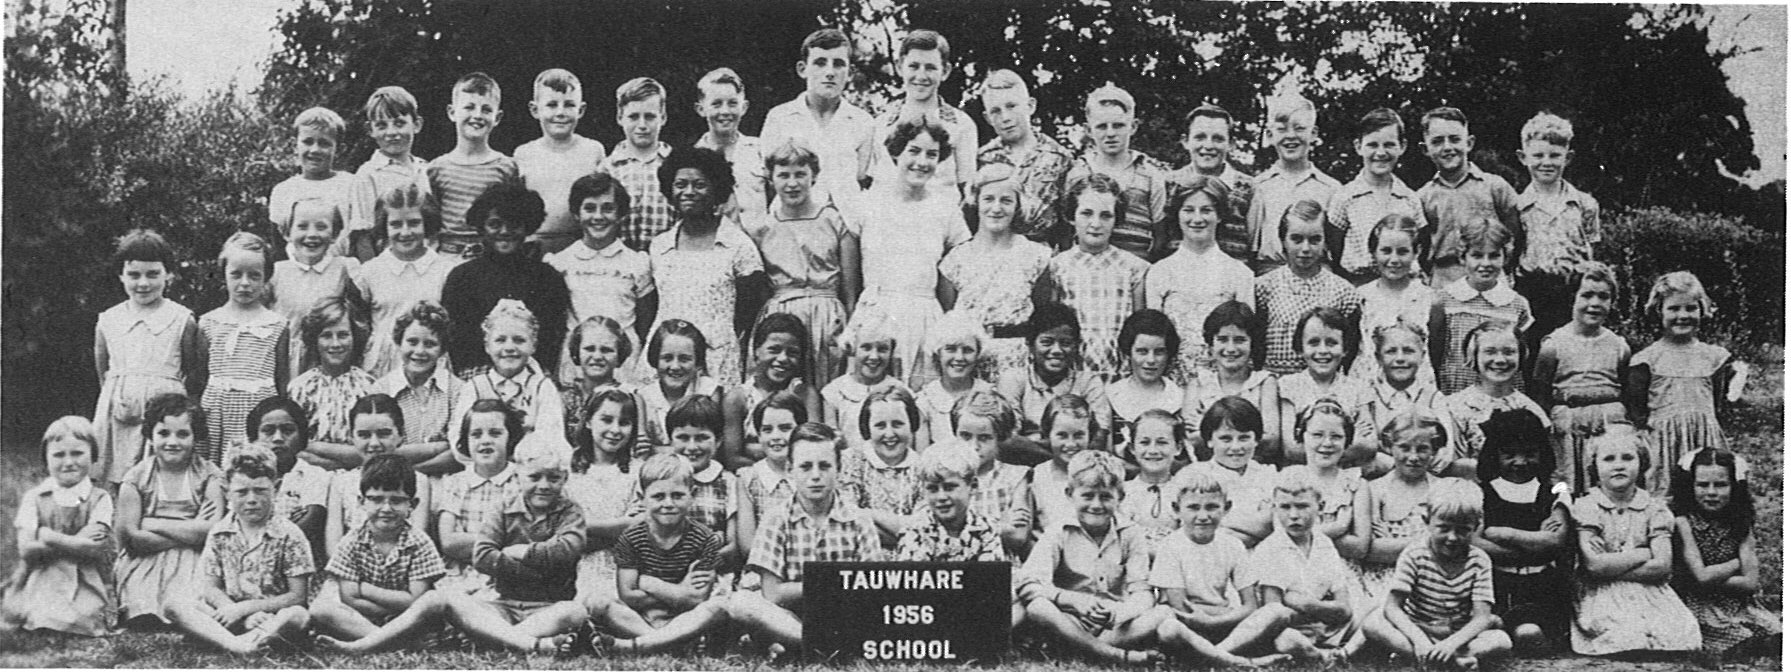 Tauwhare School, 1956